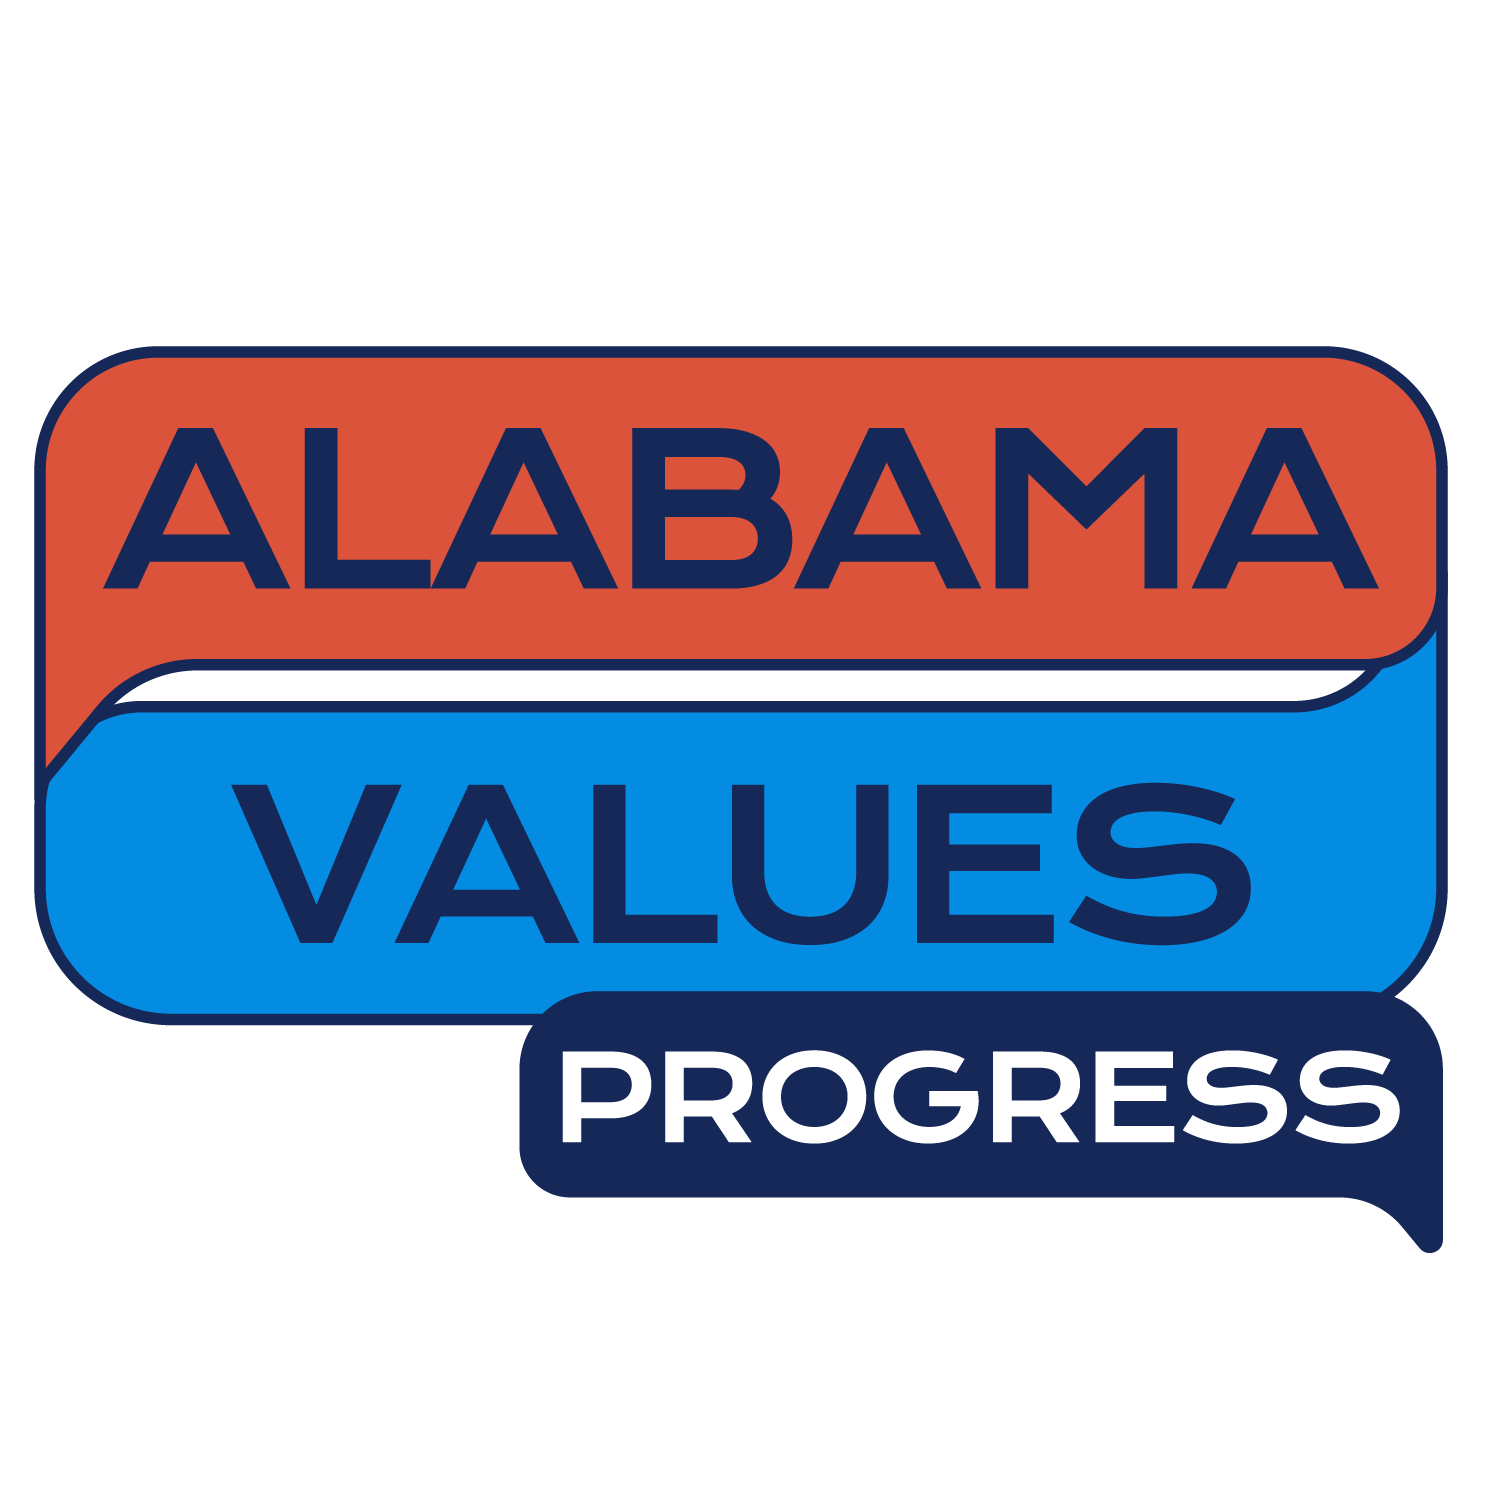 Alabama Values Progress logo